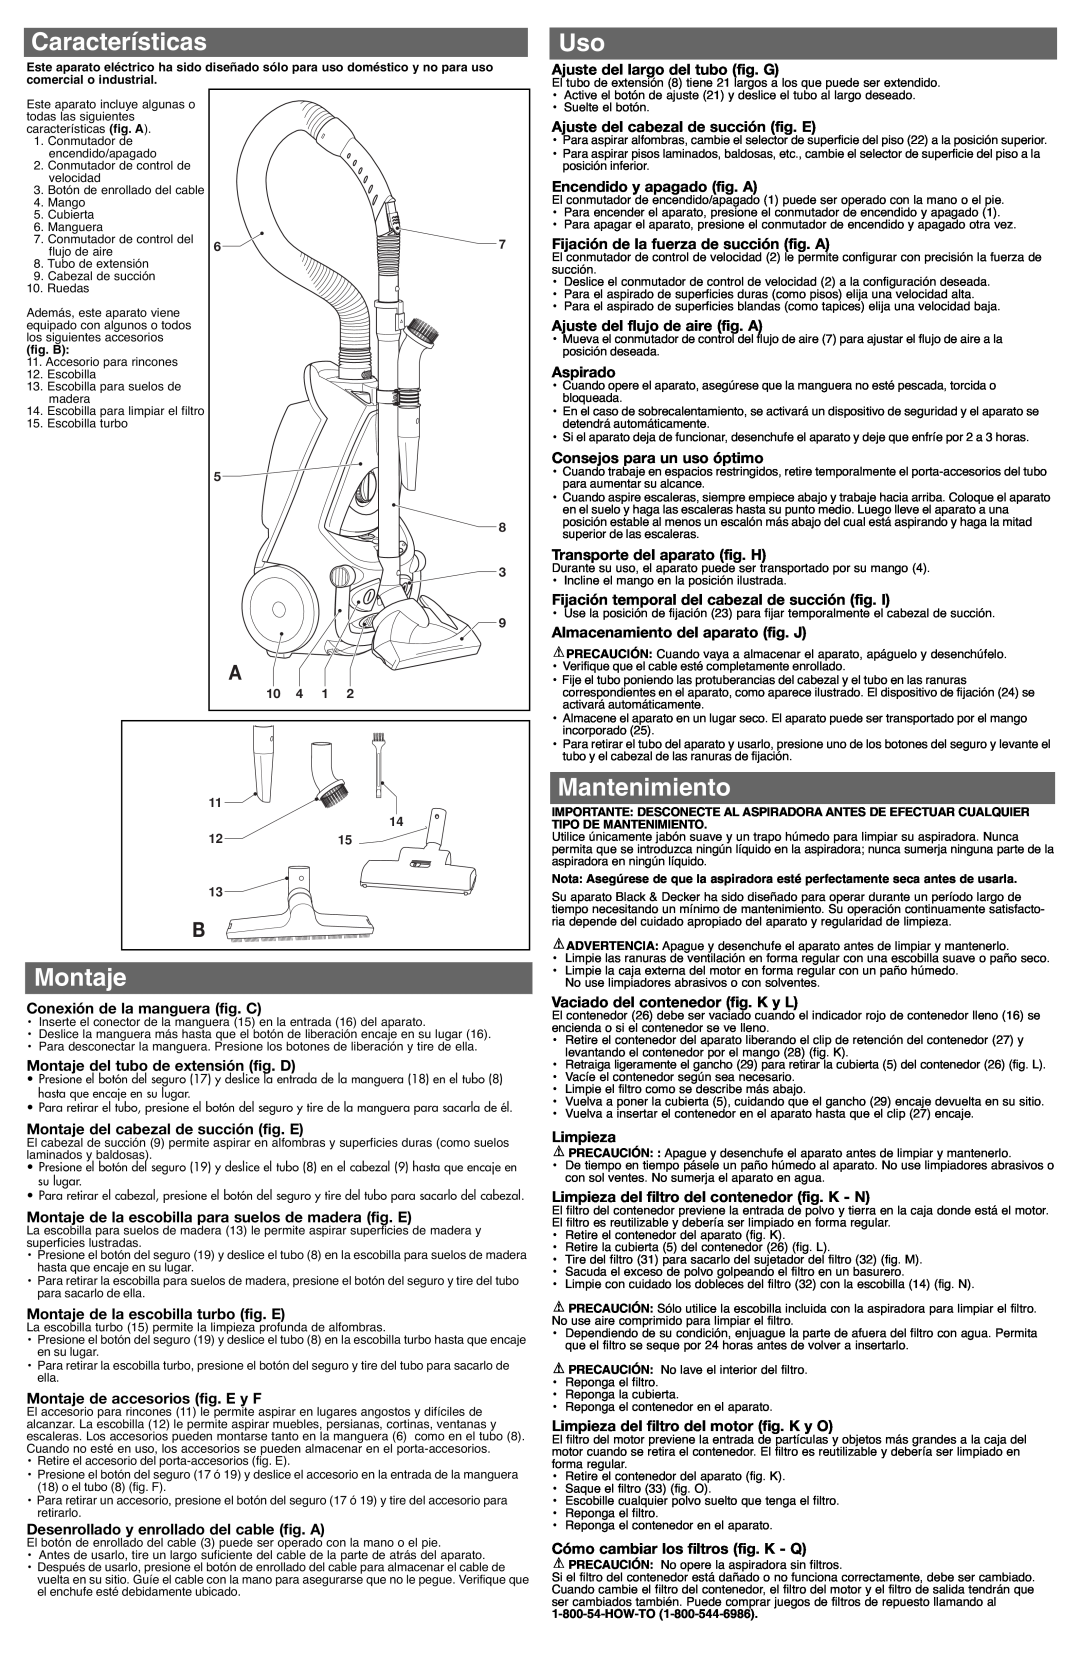 Black & Decker CV1400, 586737-03 instruction manual Características, Montaje, Mantenimiento 